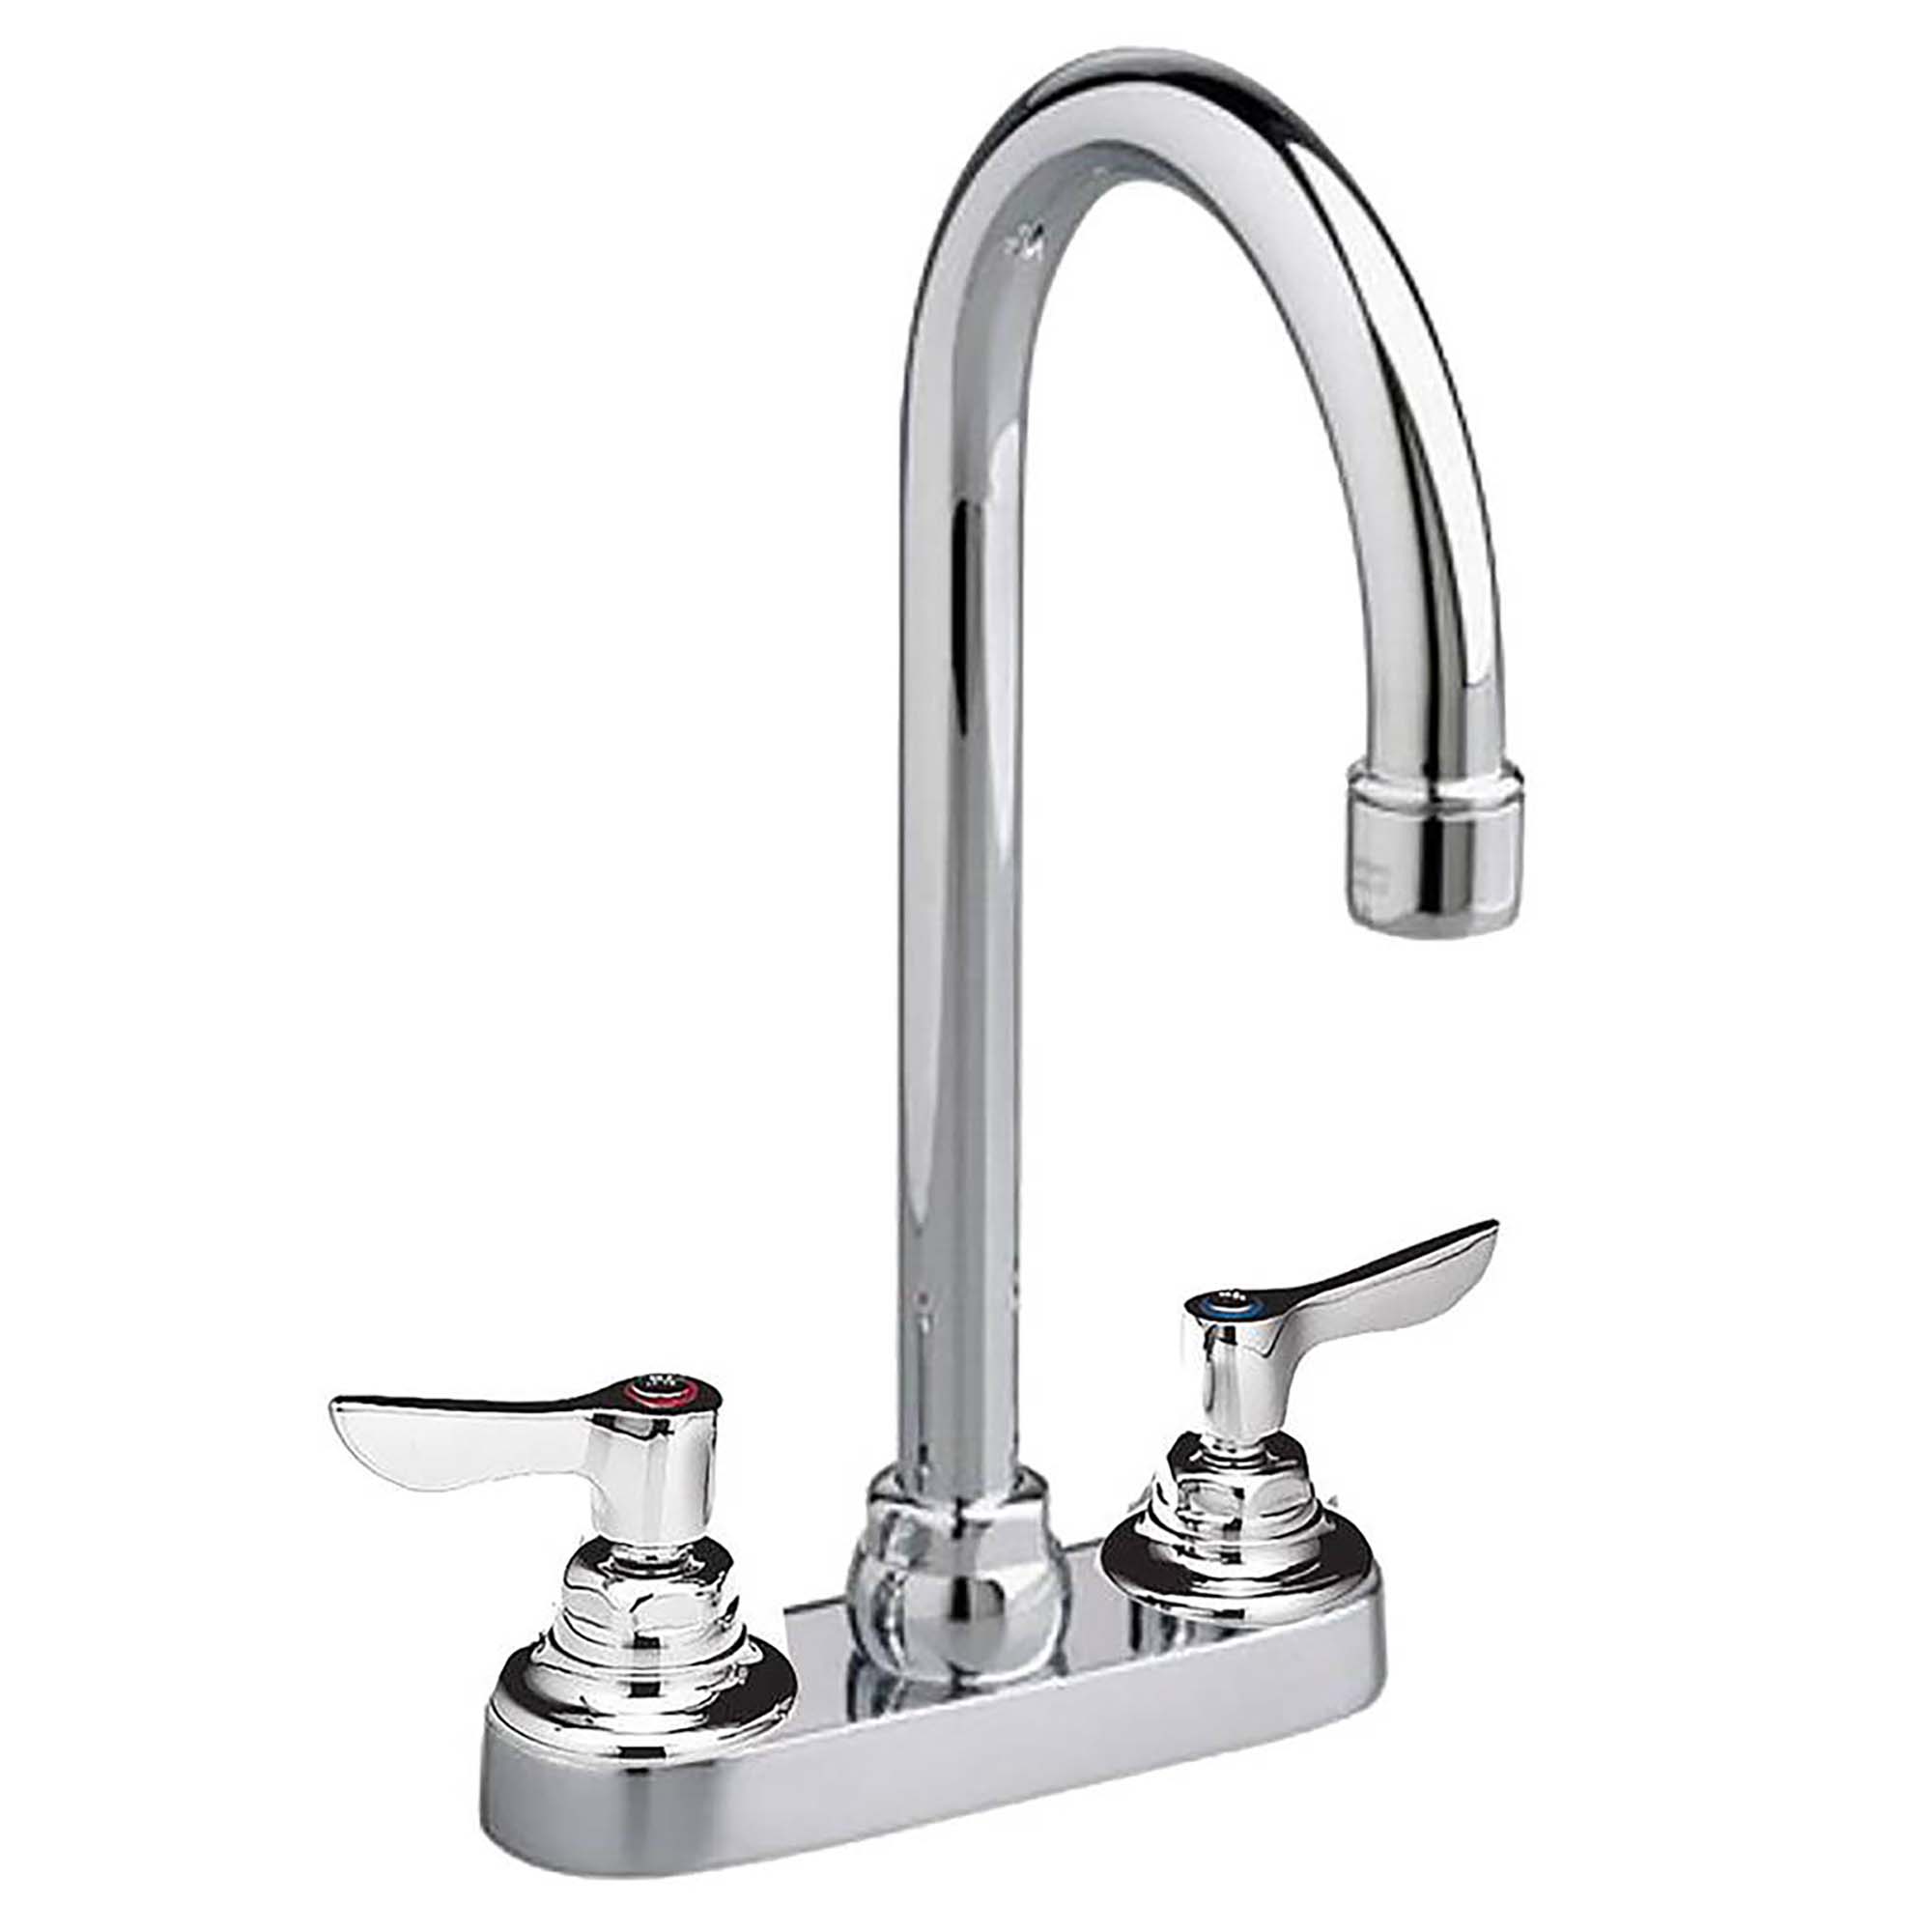 Monterrey® 4-Inch Centerset Gooseneck Faucet With Lever Handles 1.5 gpm/5.7 Lpm